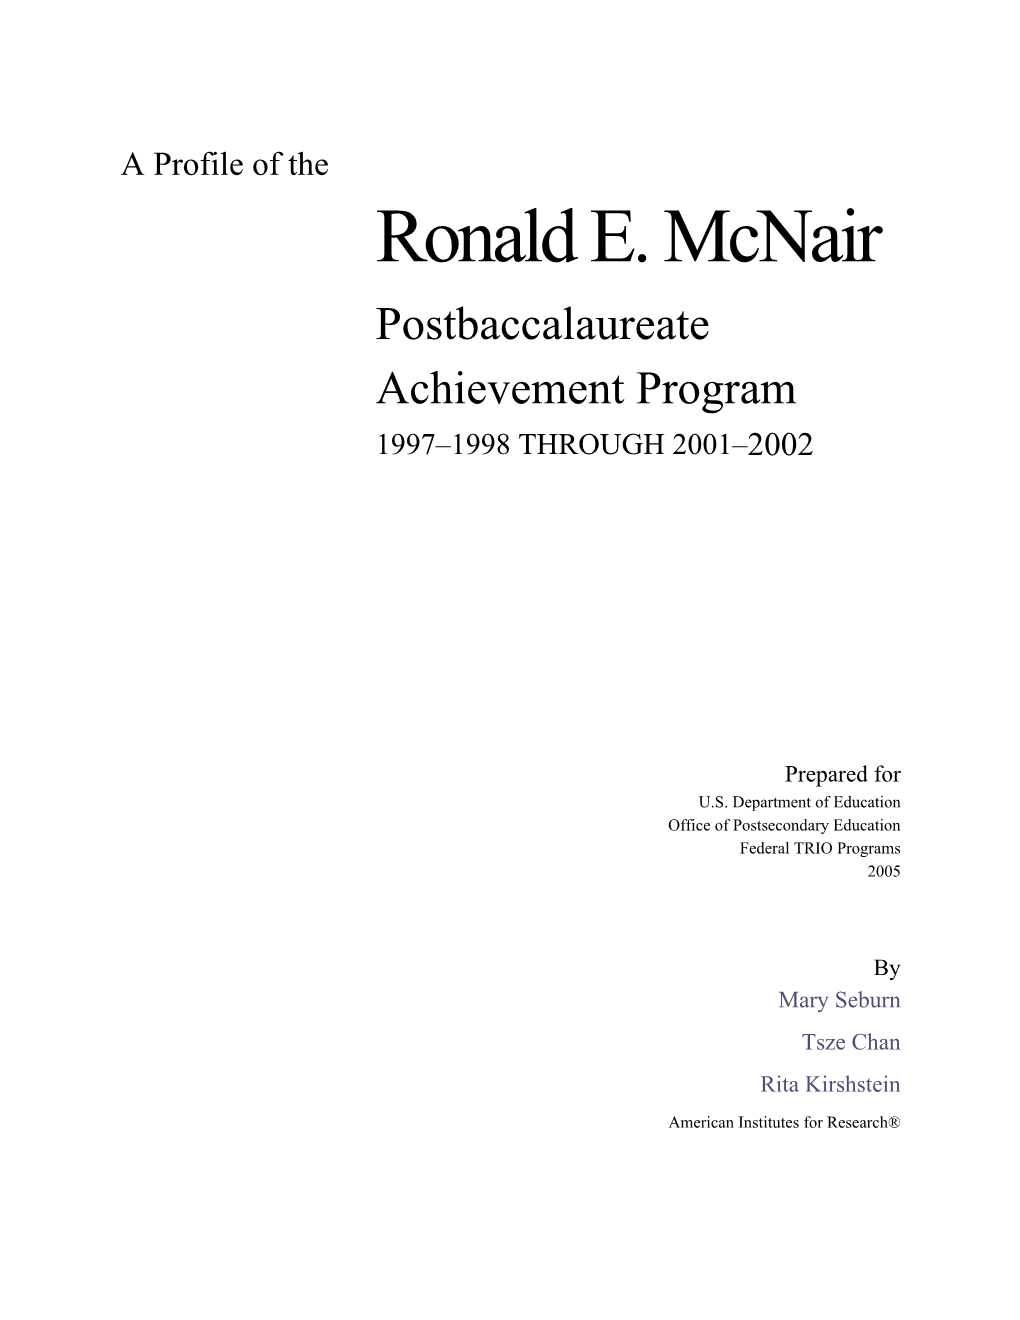 Profile of the Ronald E. Mcnair Postbaccalaureate Achievement Program: 1997 1998 Through